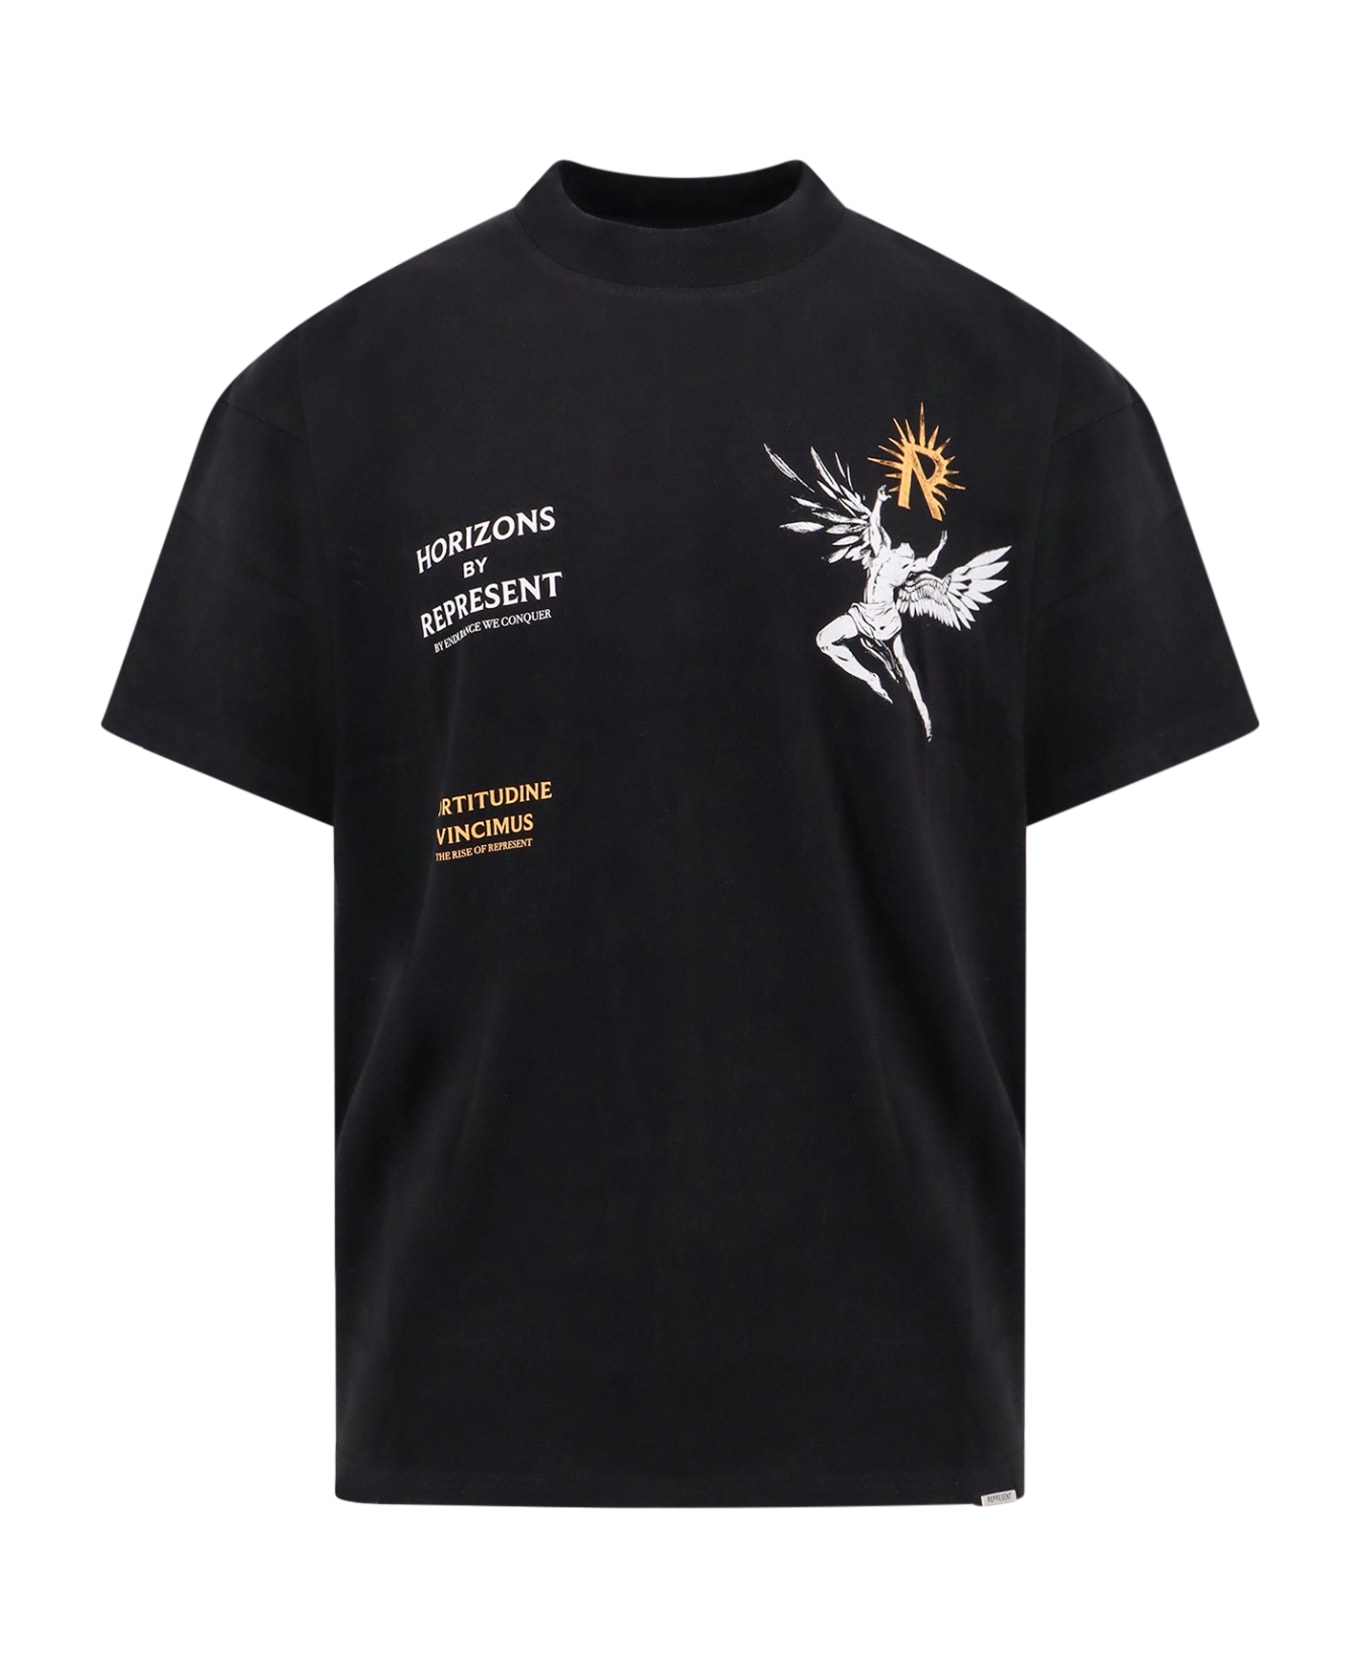 REPRESENT T-shirt T-Shirt - JET BLACK